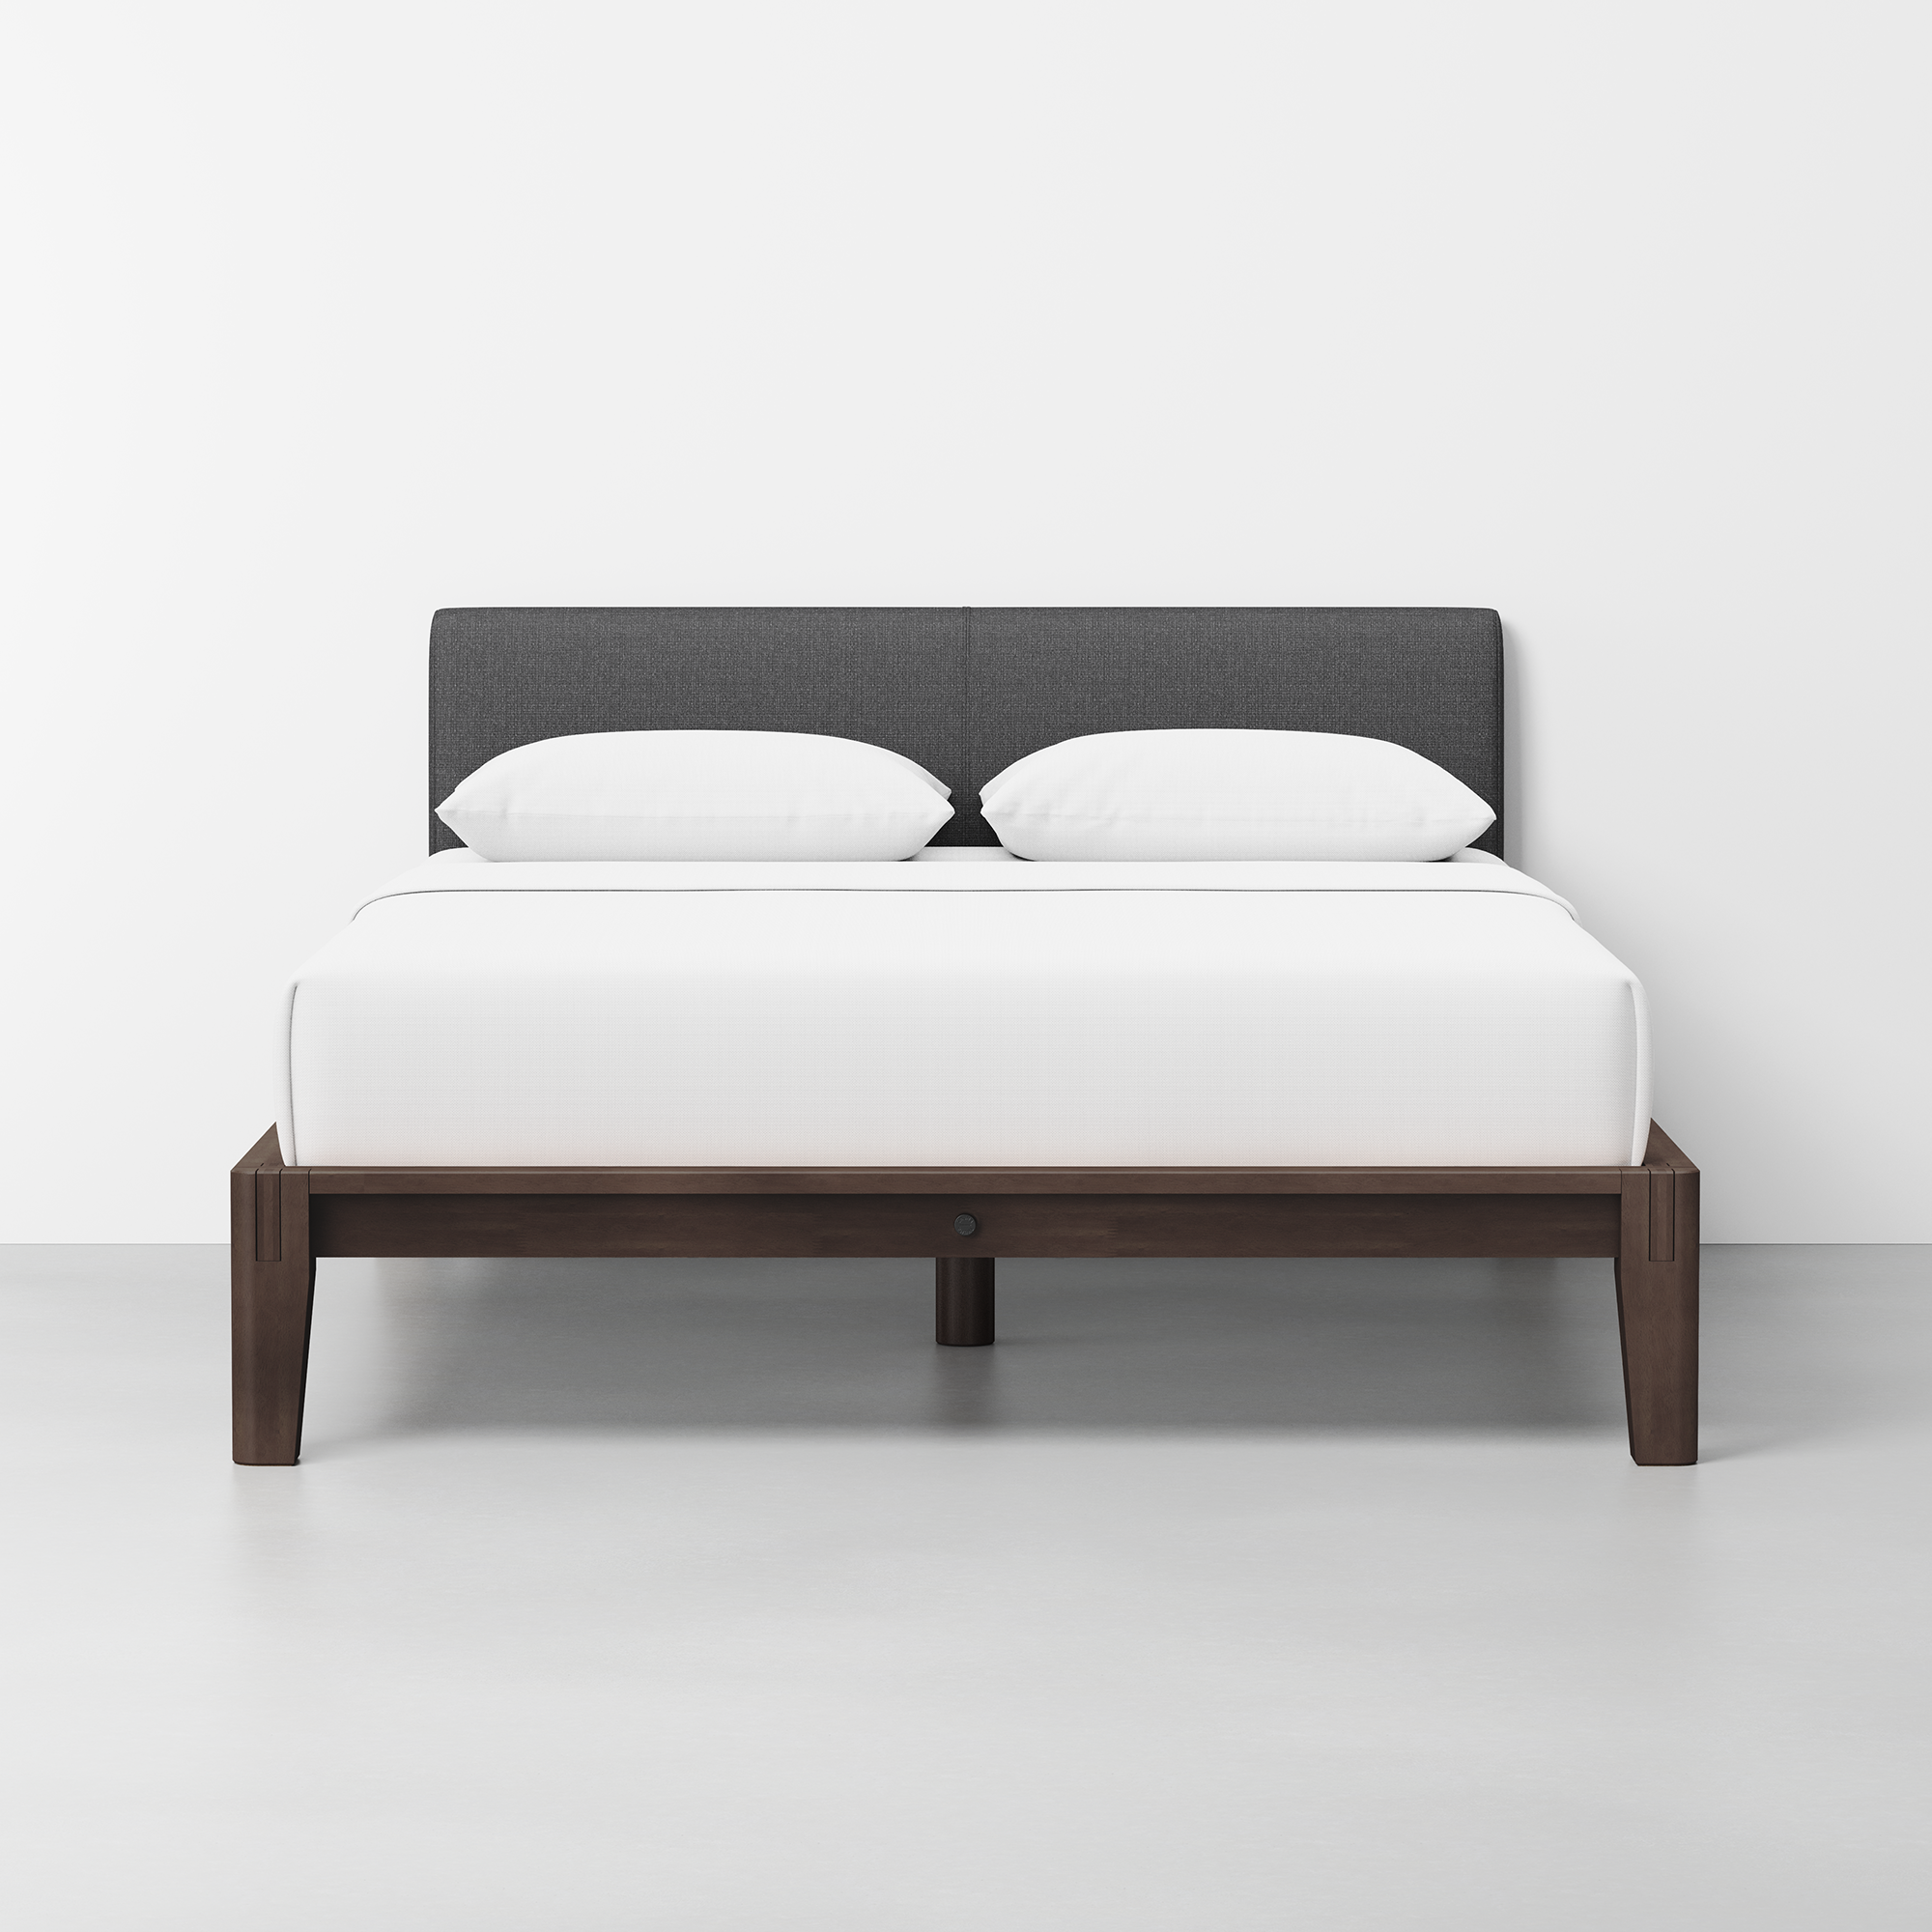 The Bed (Espresso / Dark Charcoal) - Render - Front